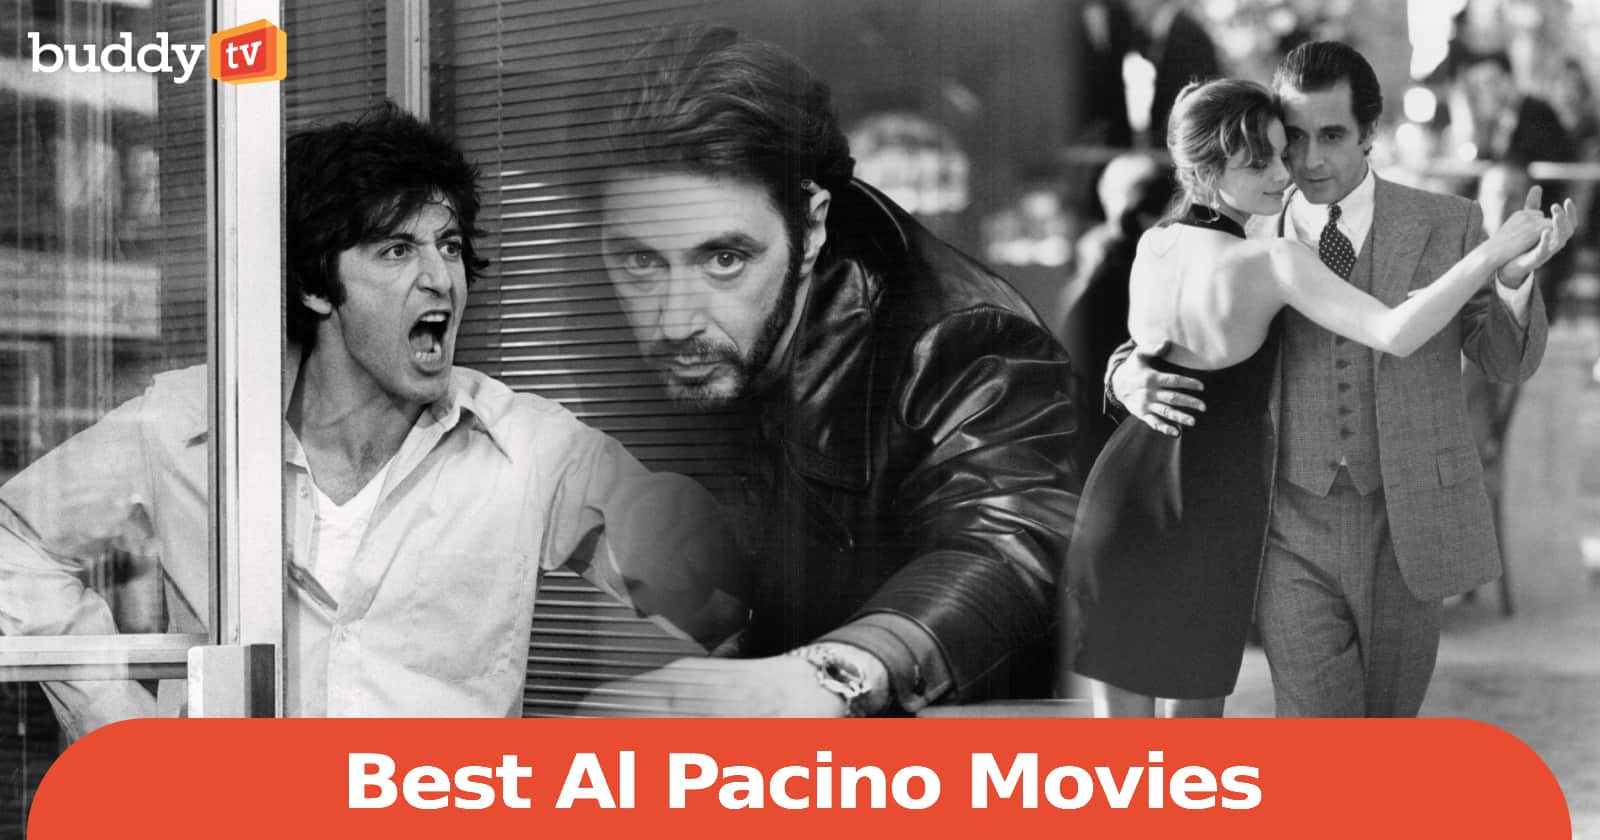 10 Best Al Pacino Movies, Ranked by Viewers